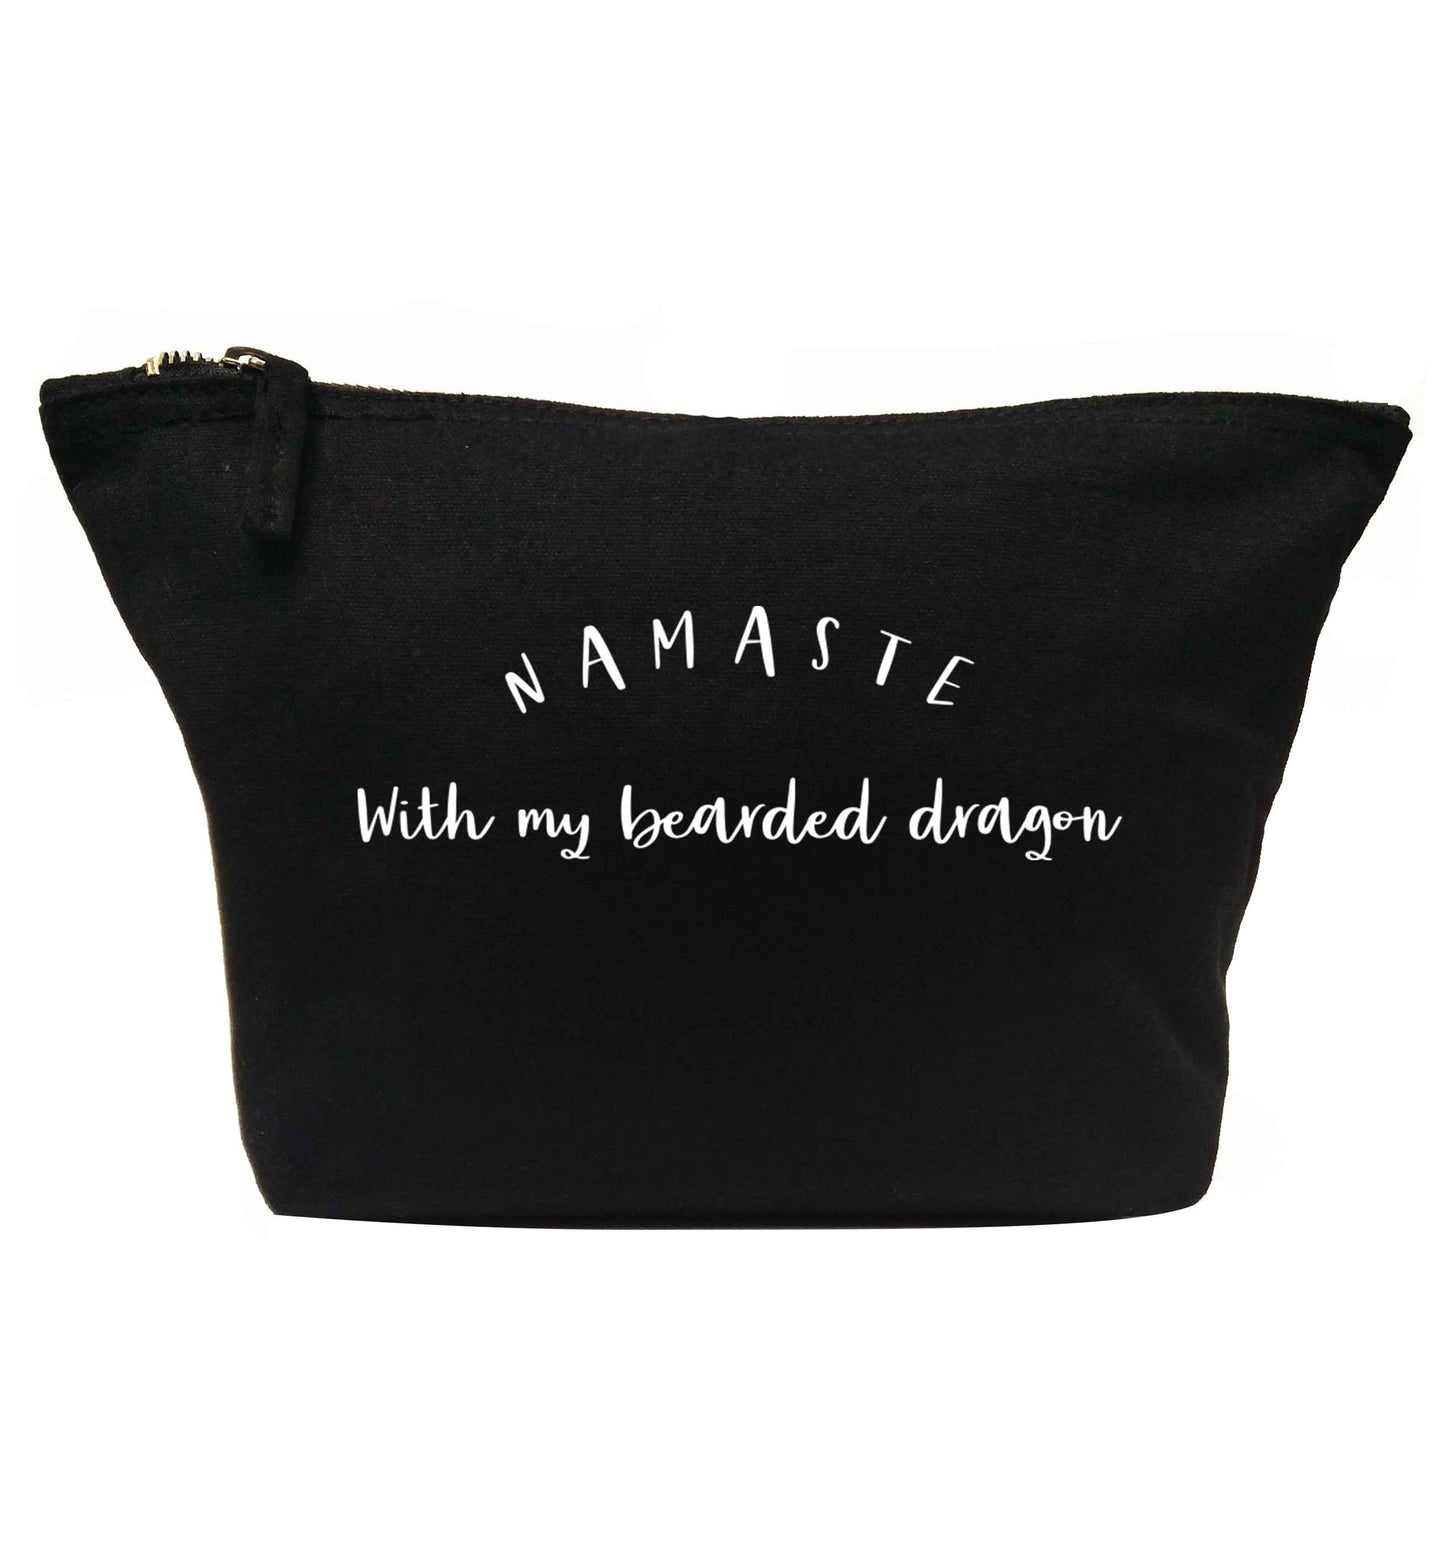 Namaste with my bearded dragon | makeup / wash bag